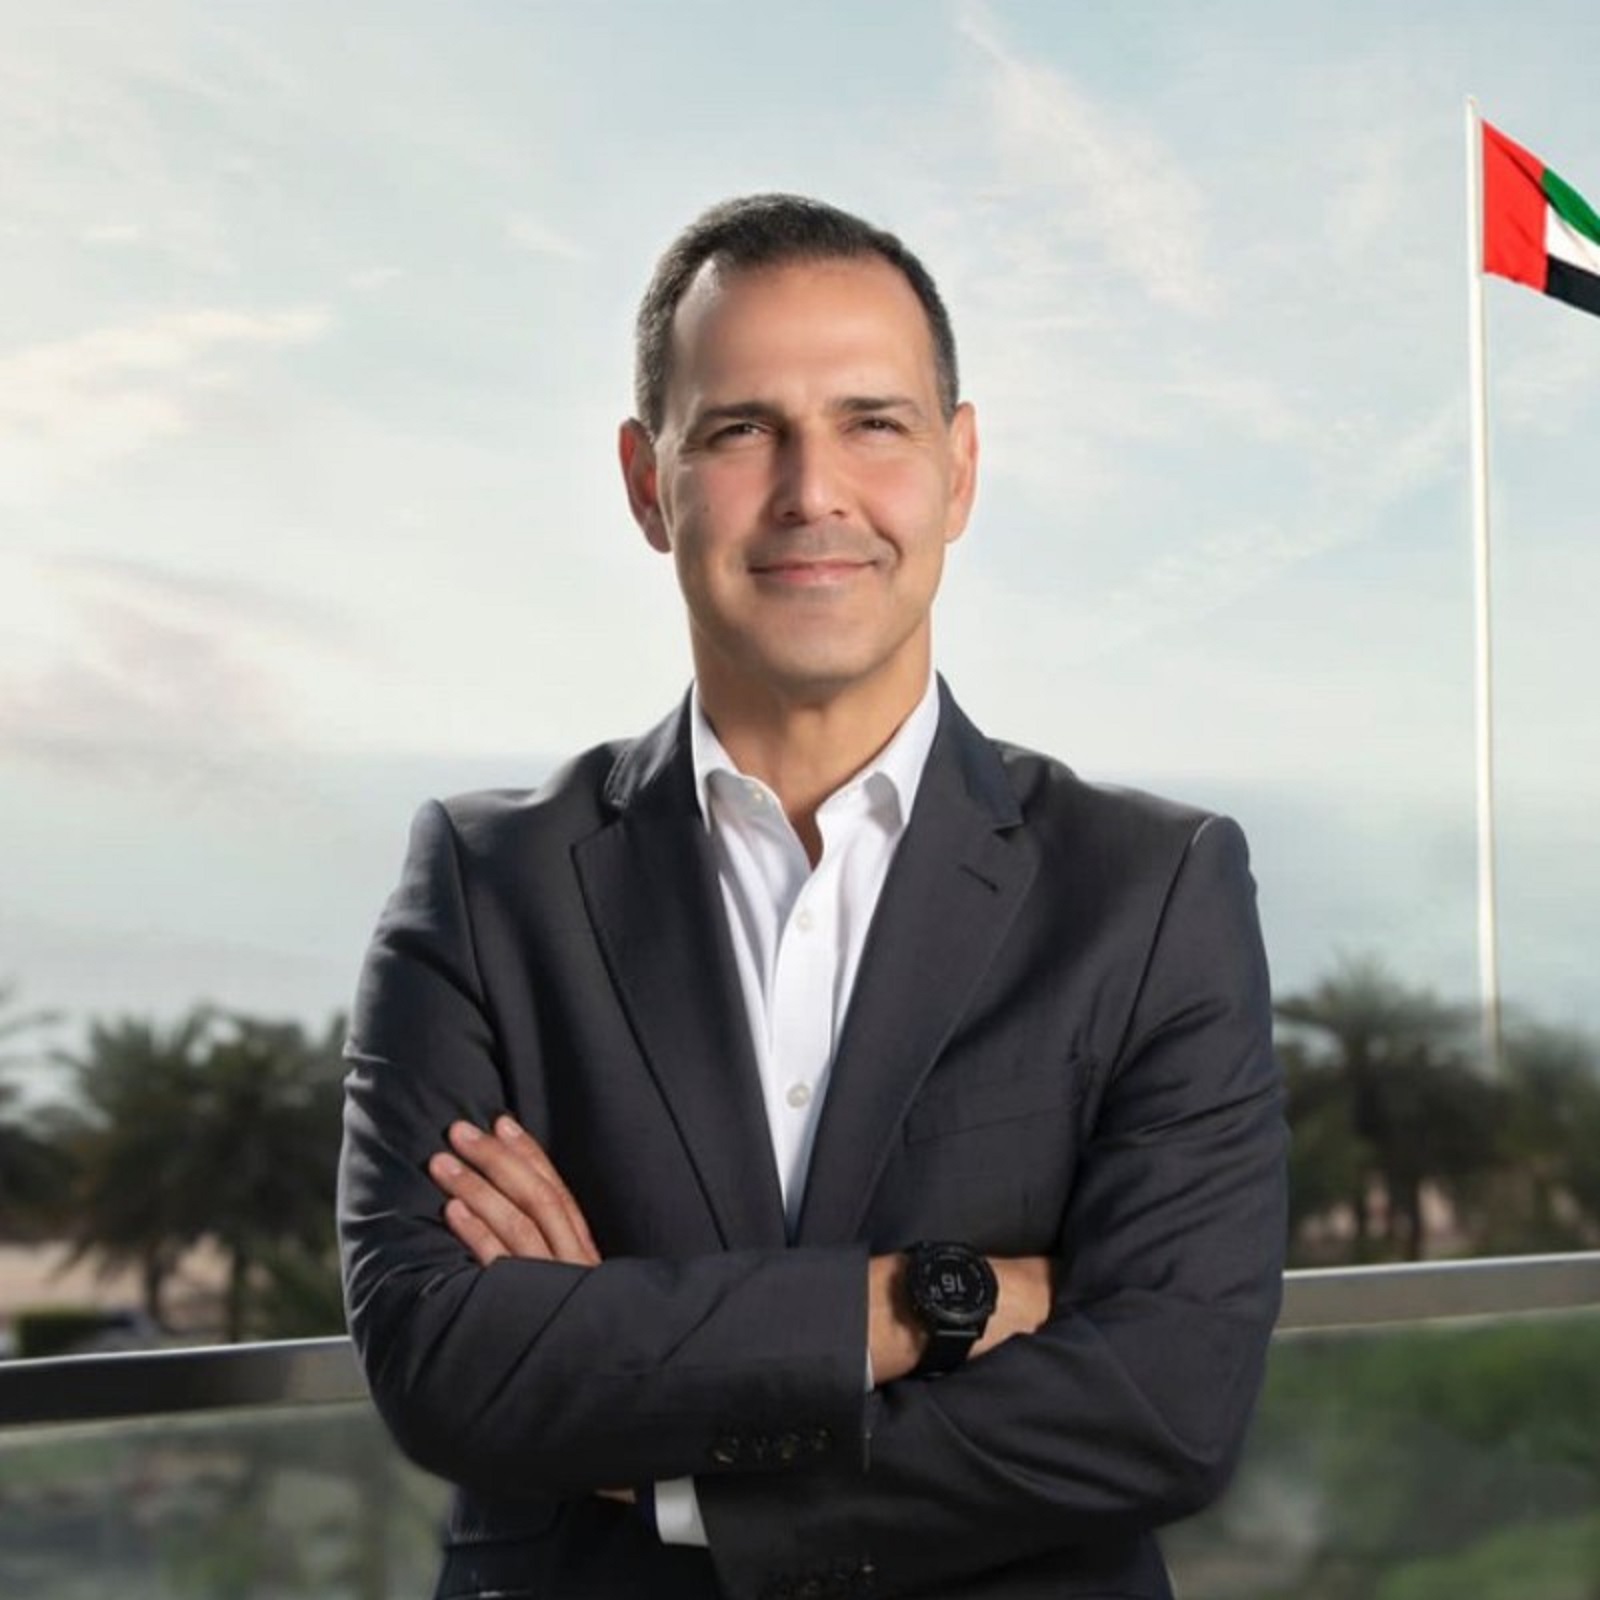 Raki Phillips, CEO of Ras Al Khaimah Tourism Development Authority